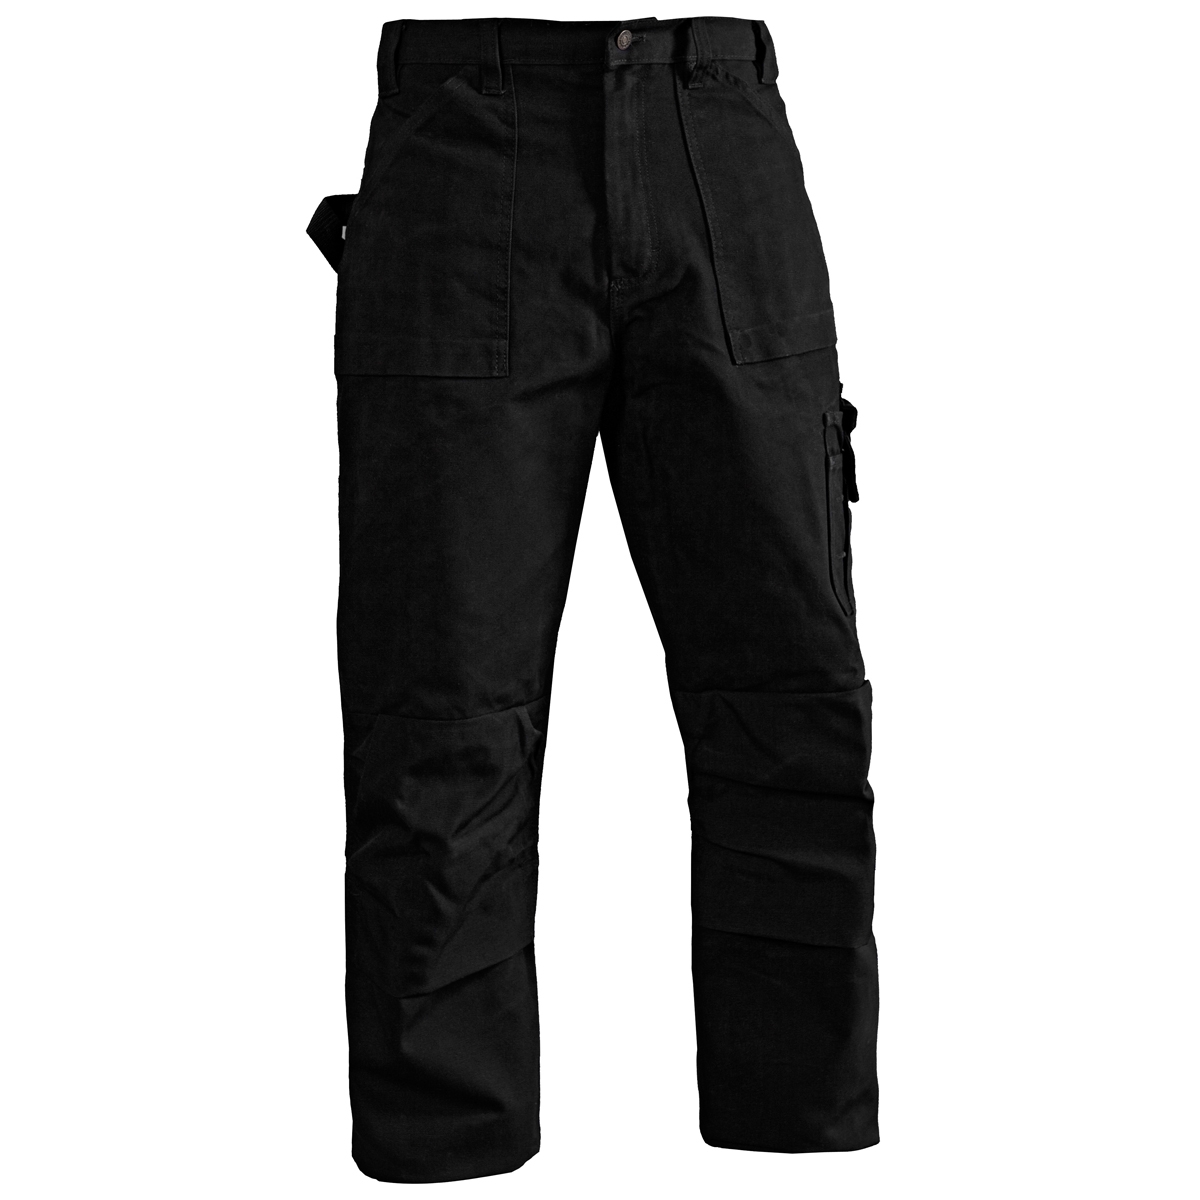 Blaklader 1670 Brawny Work Pants - Black | FullSource.com